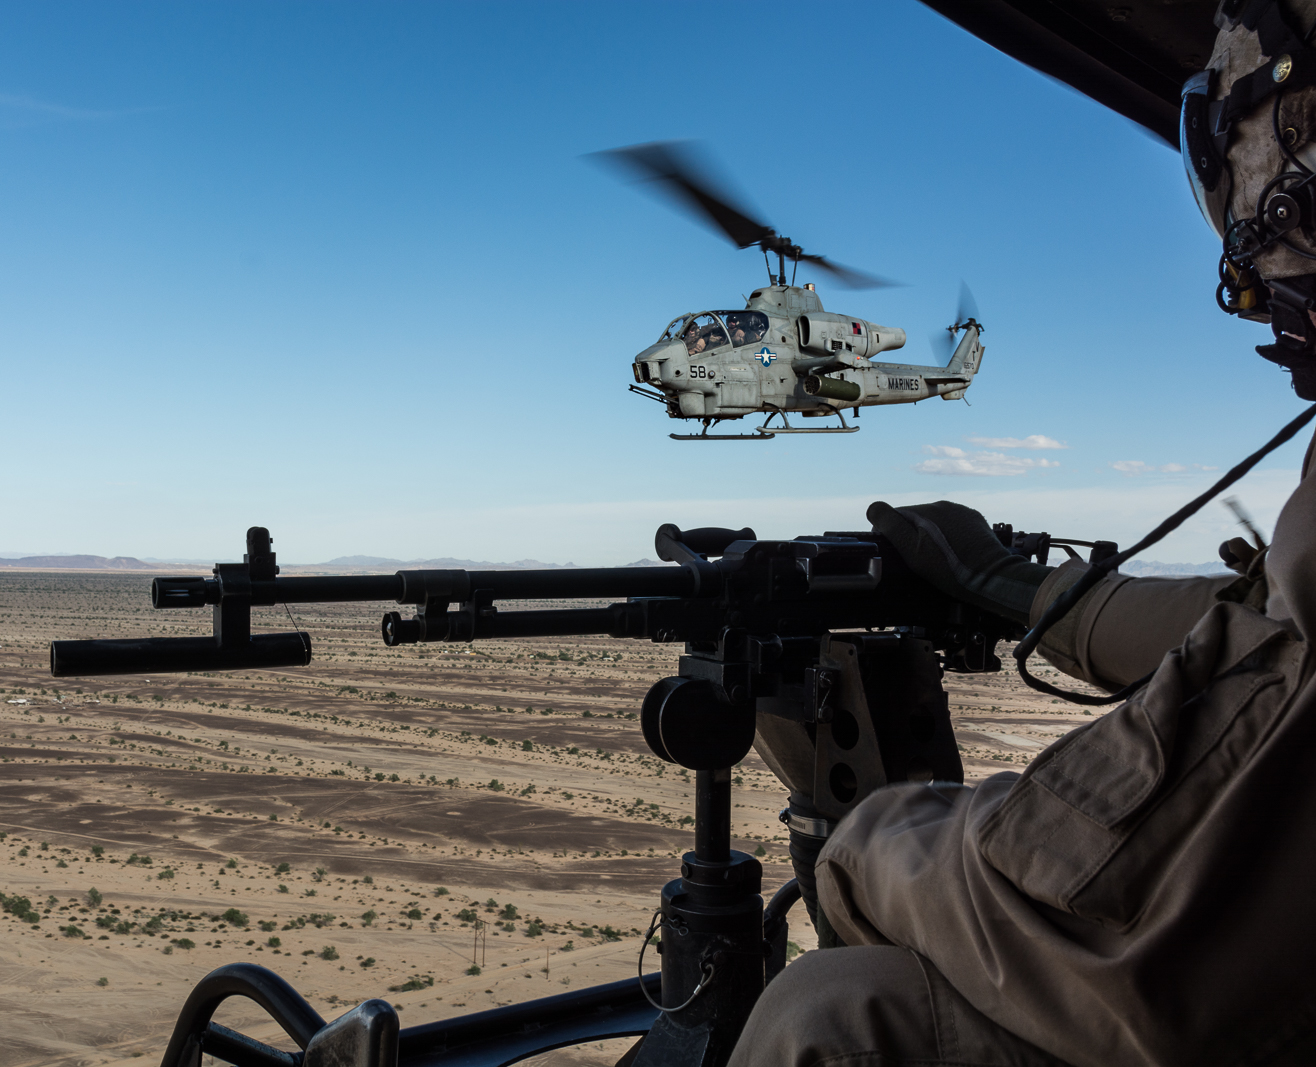 USMC Marine Light Attack Helicopter Squadron HMLA 